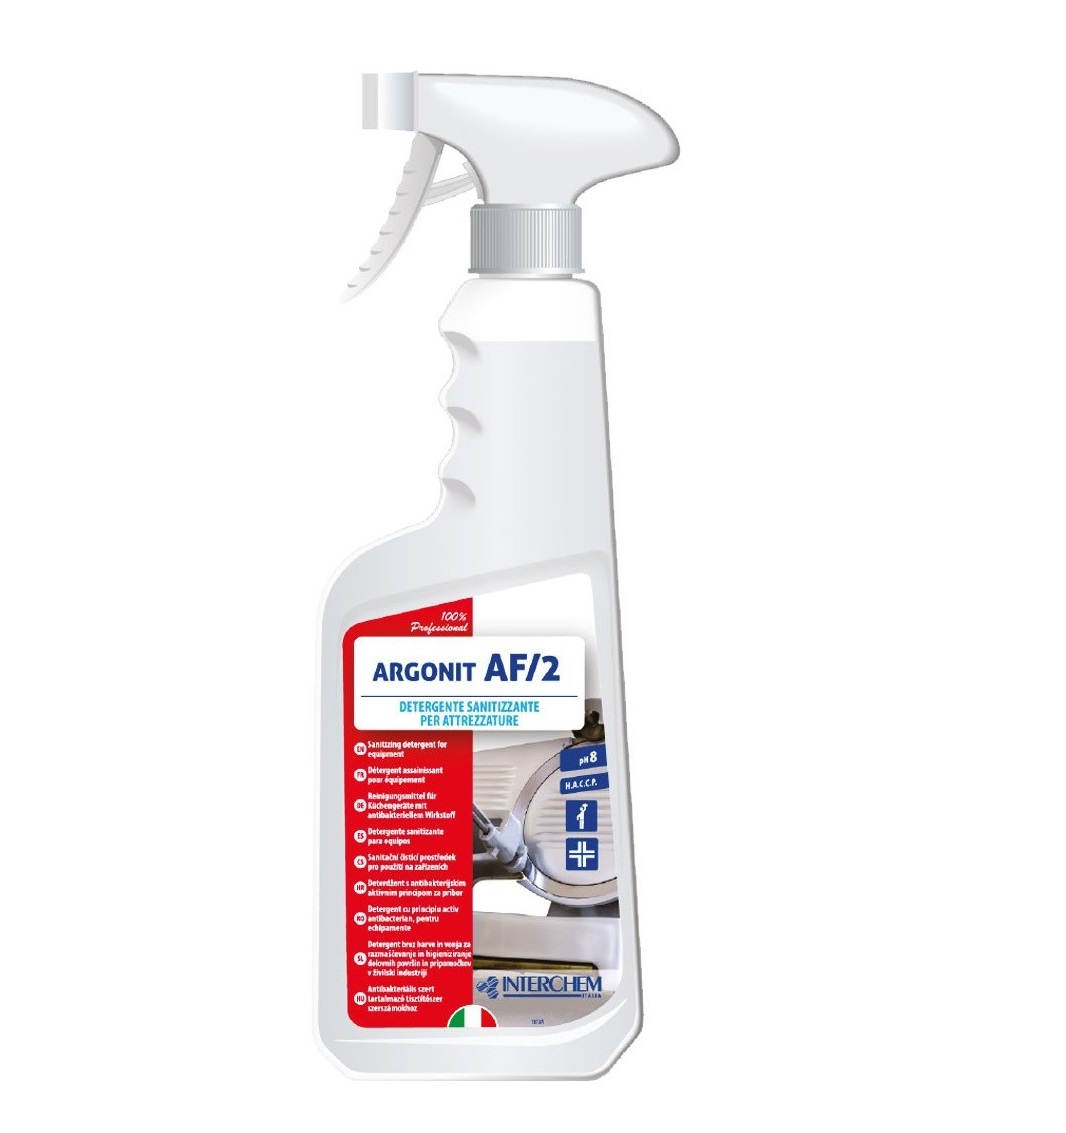 Spray detergente sanitizzante per settore alimentare Argonit AF/2  750 ml